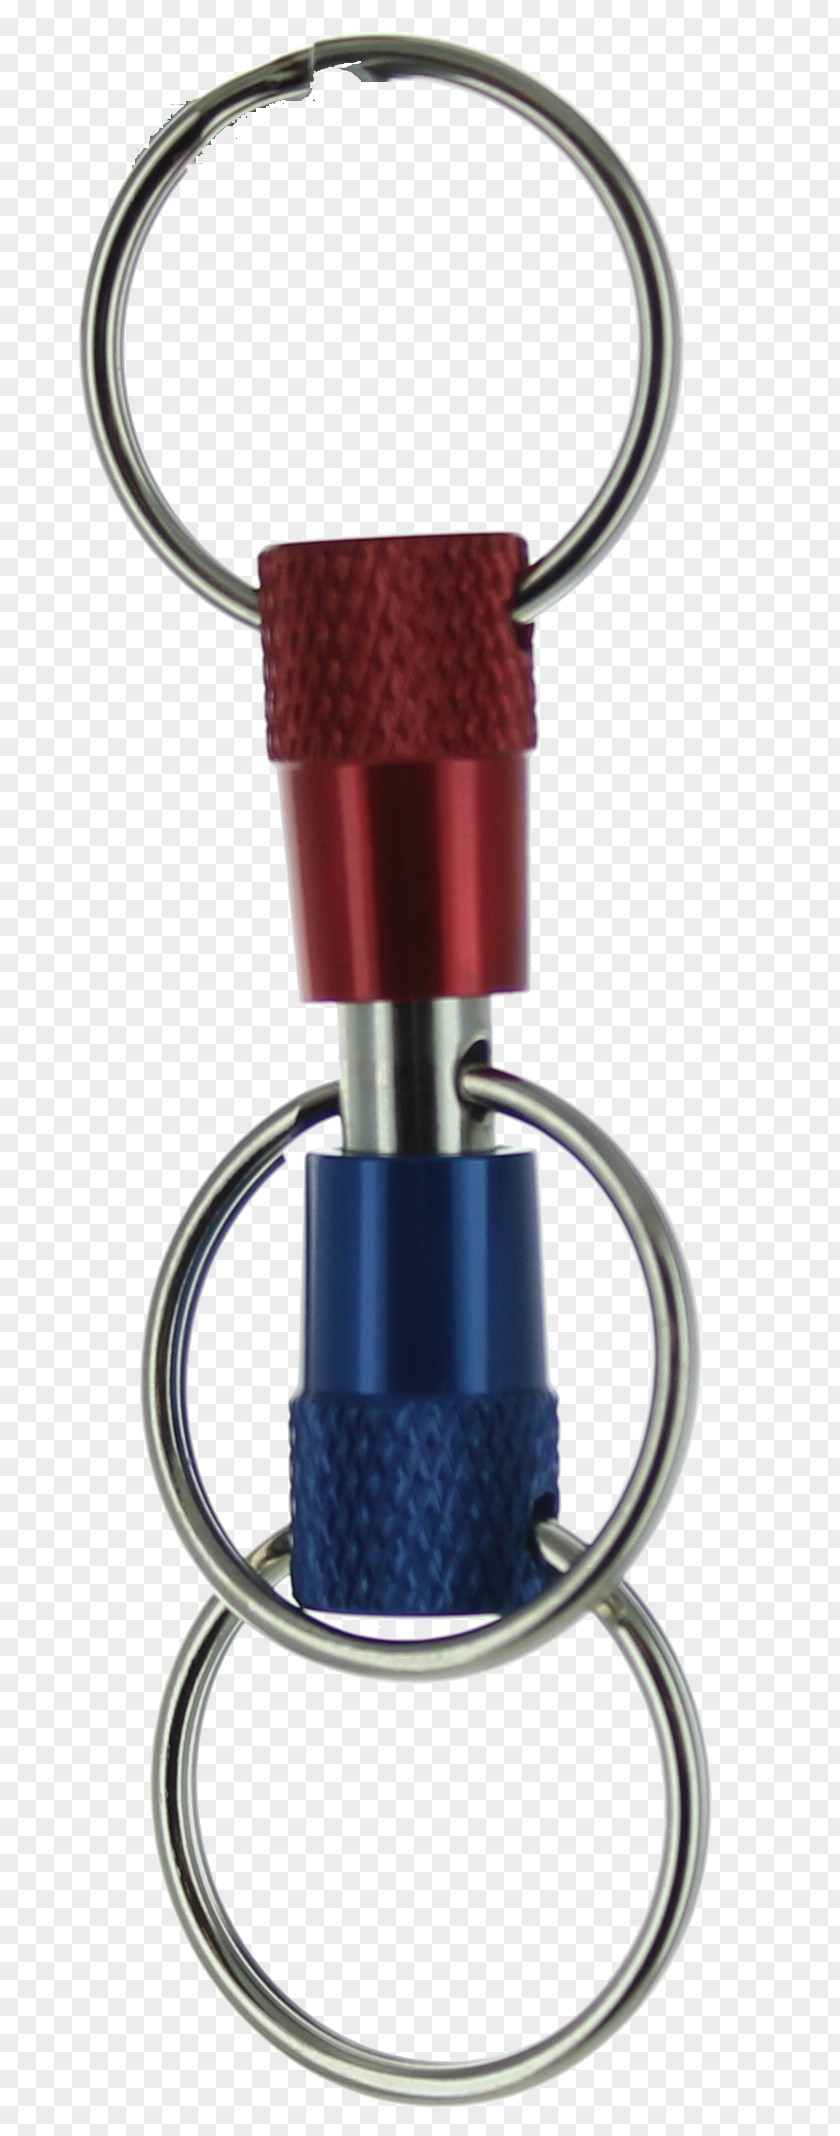 Design Key Chains Cobalt Blue PNG